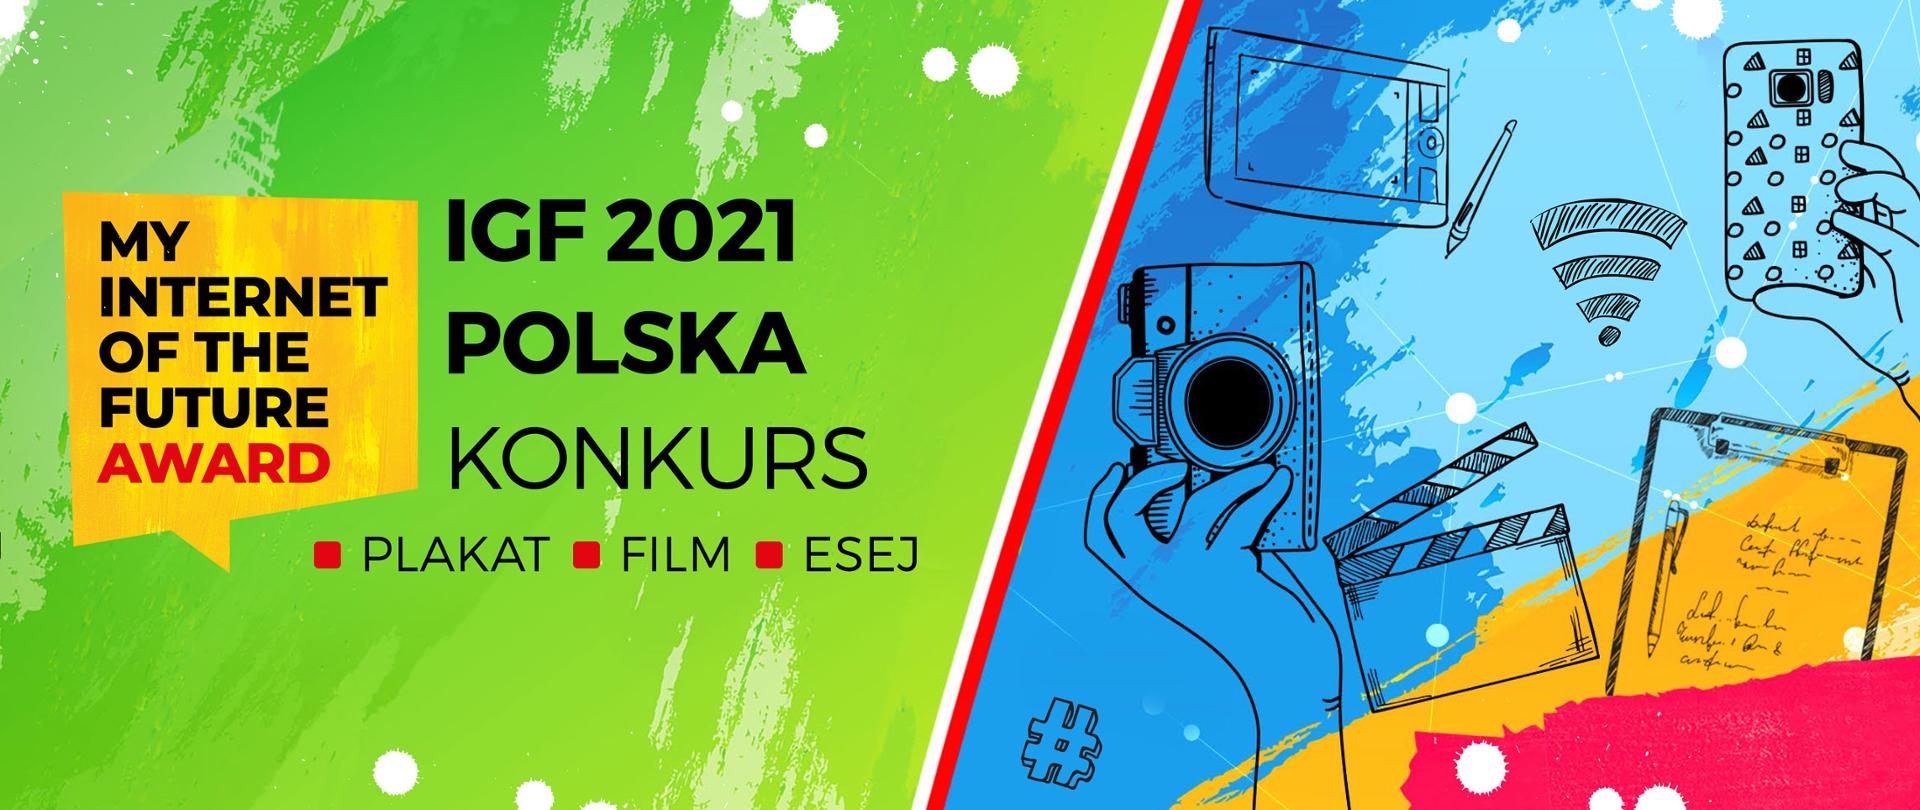 MY INTERNET OF THE FUTURE AWARD
IGF 2021
POLSKA
KONKURS
PLAKAT, FILM, ESEJ